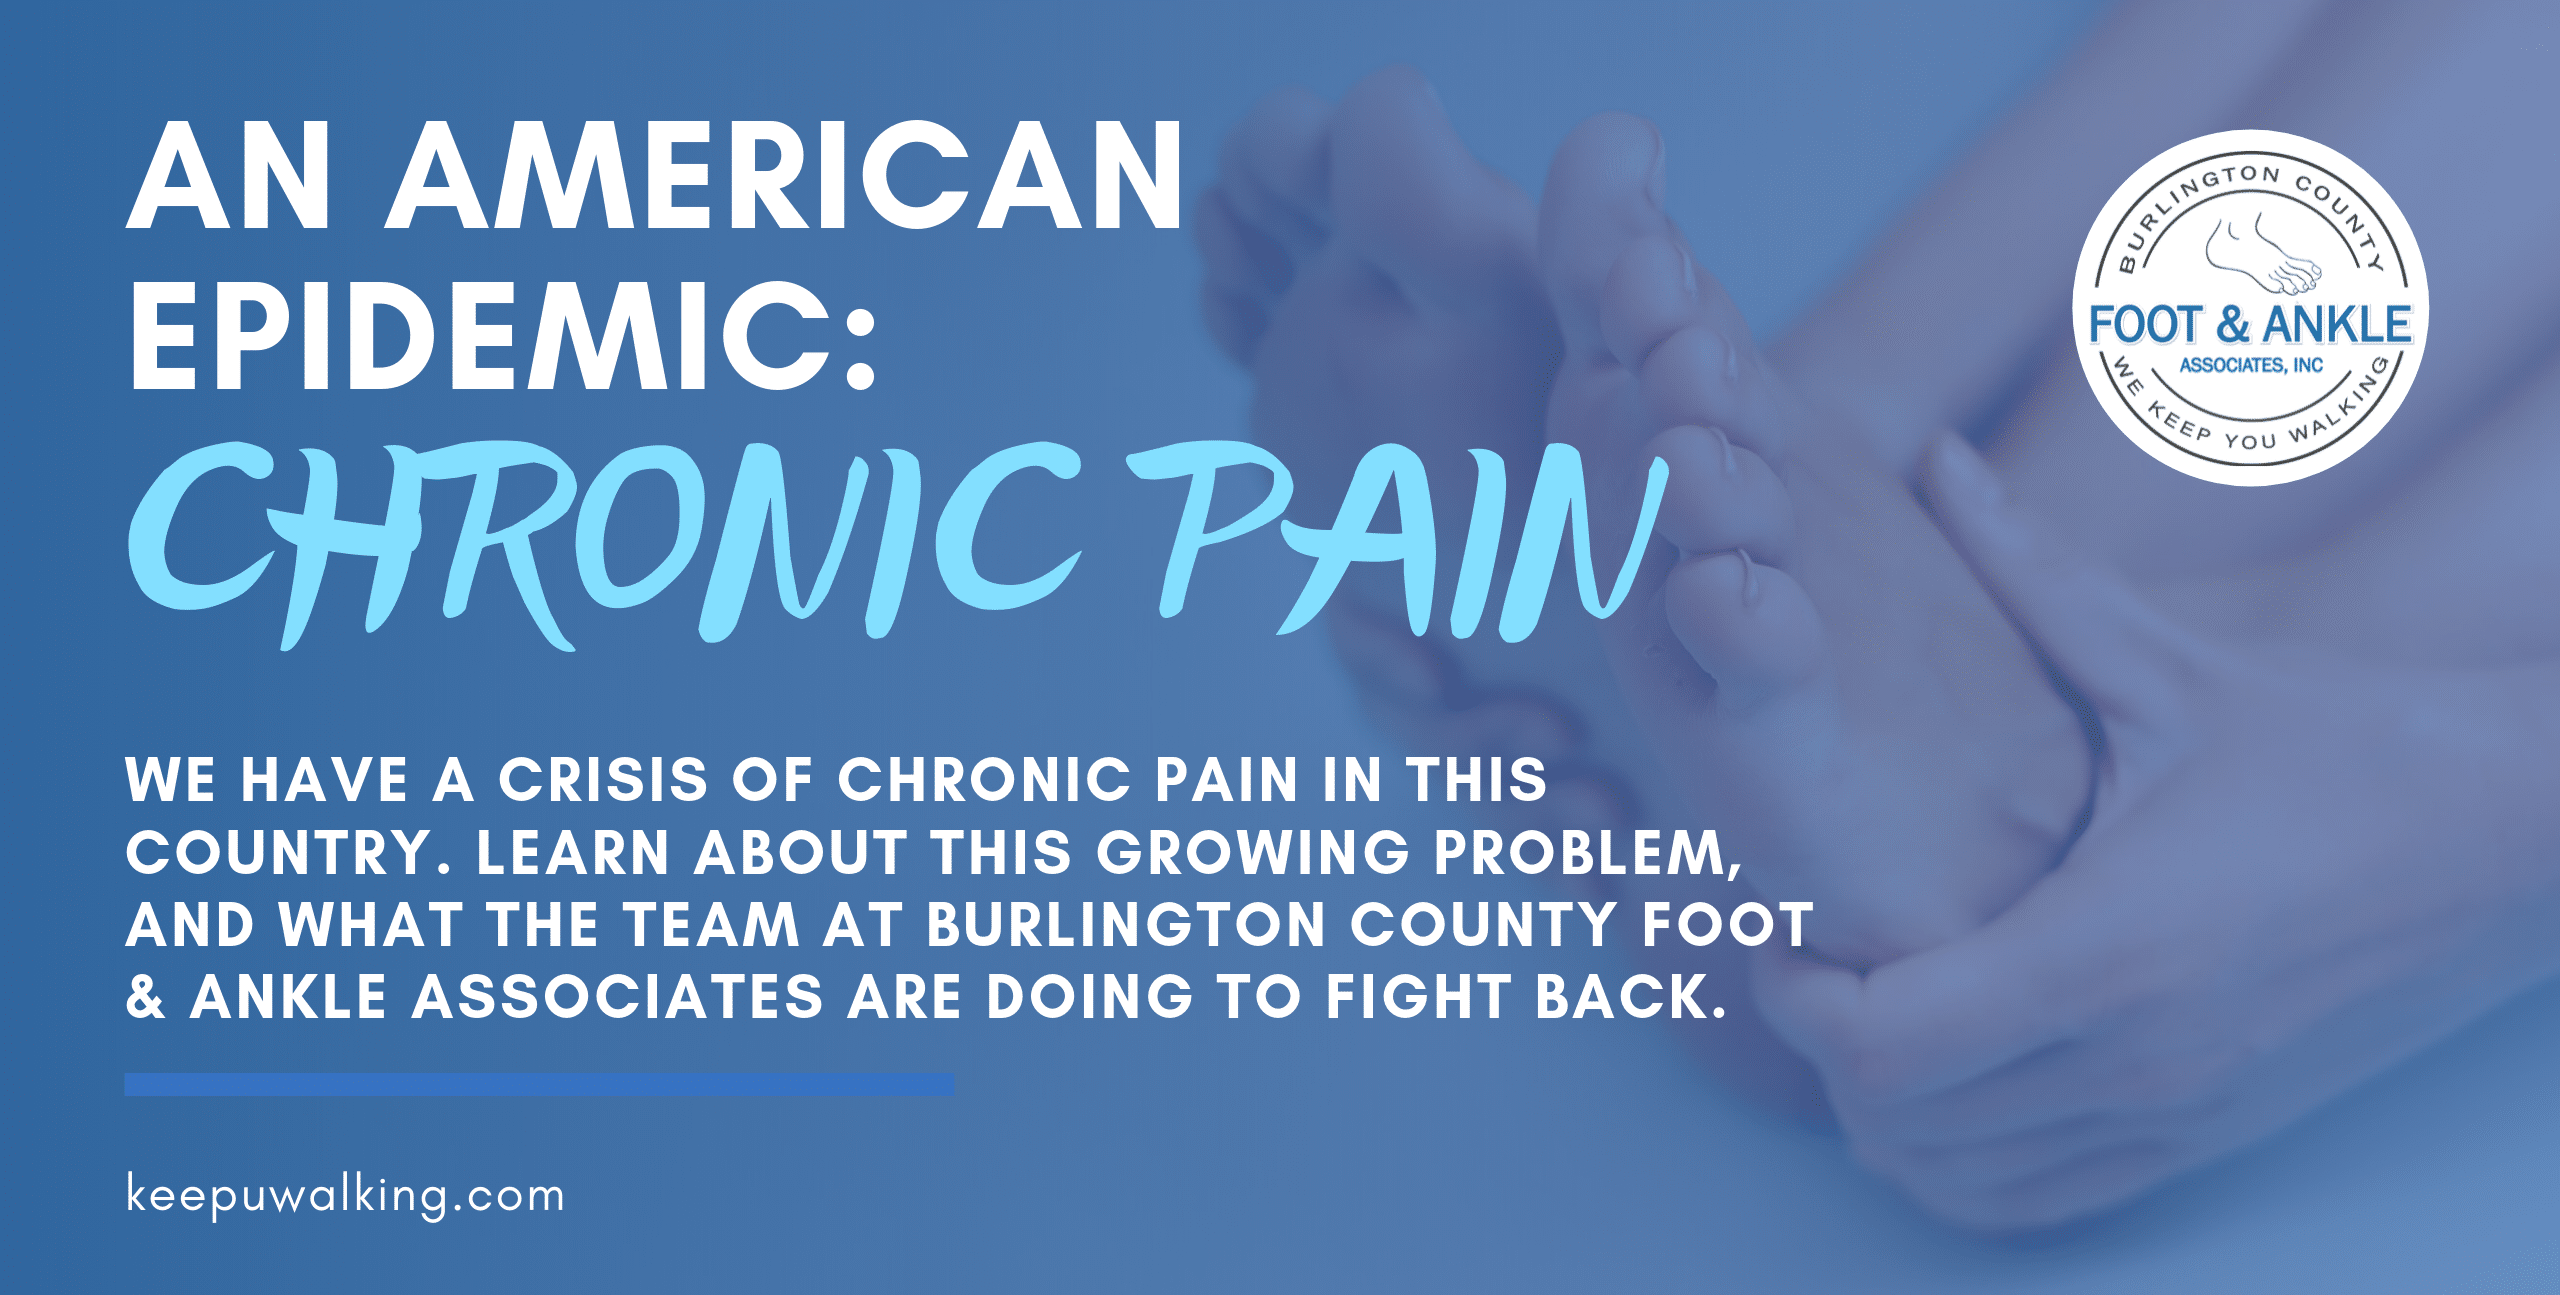 An American Epidemic: Chronic Pain